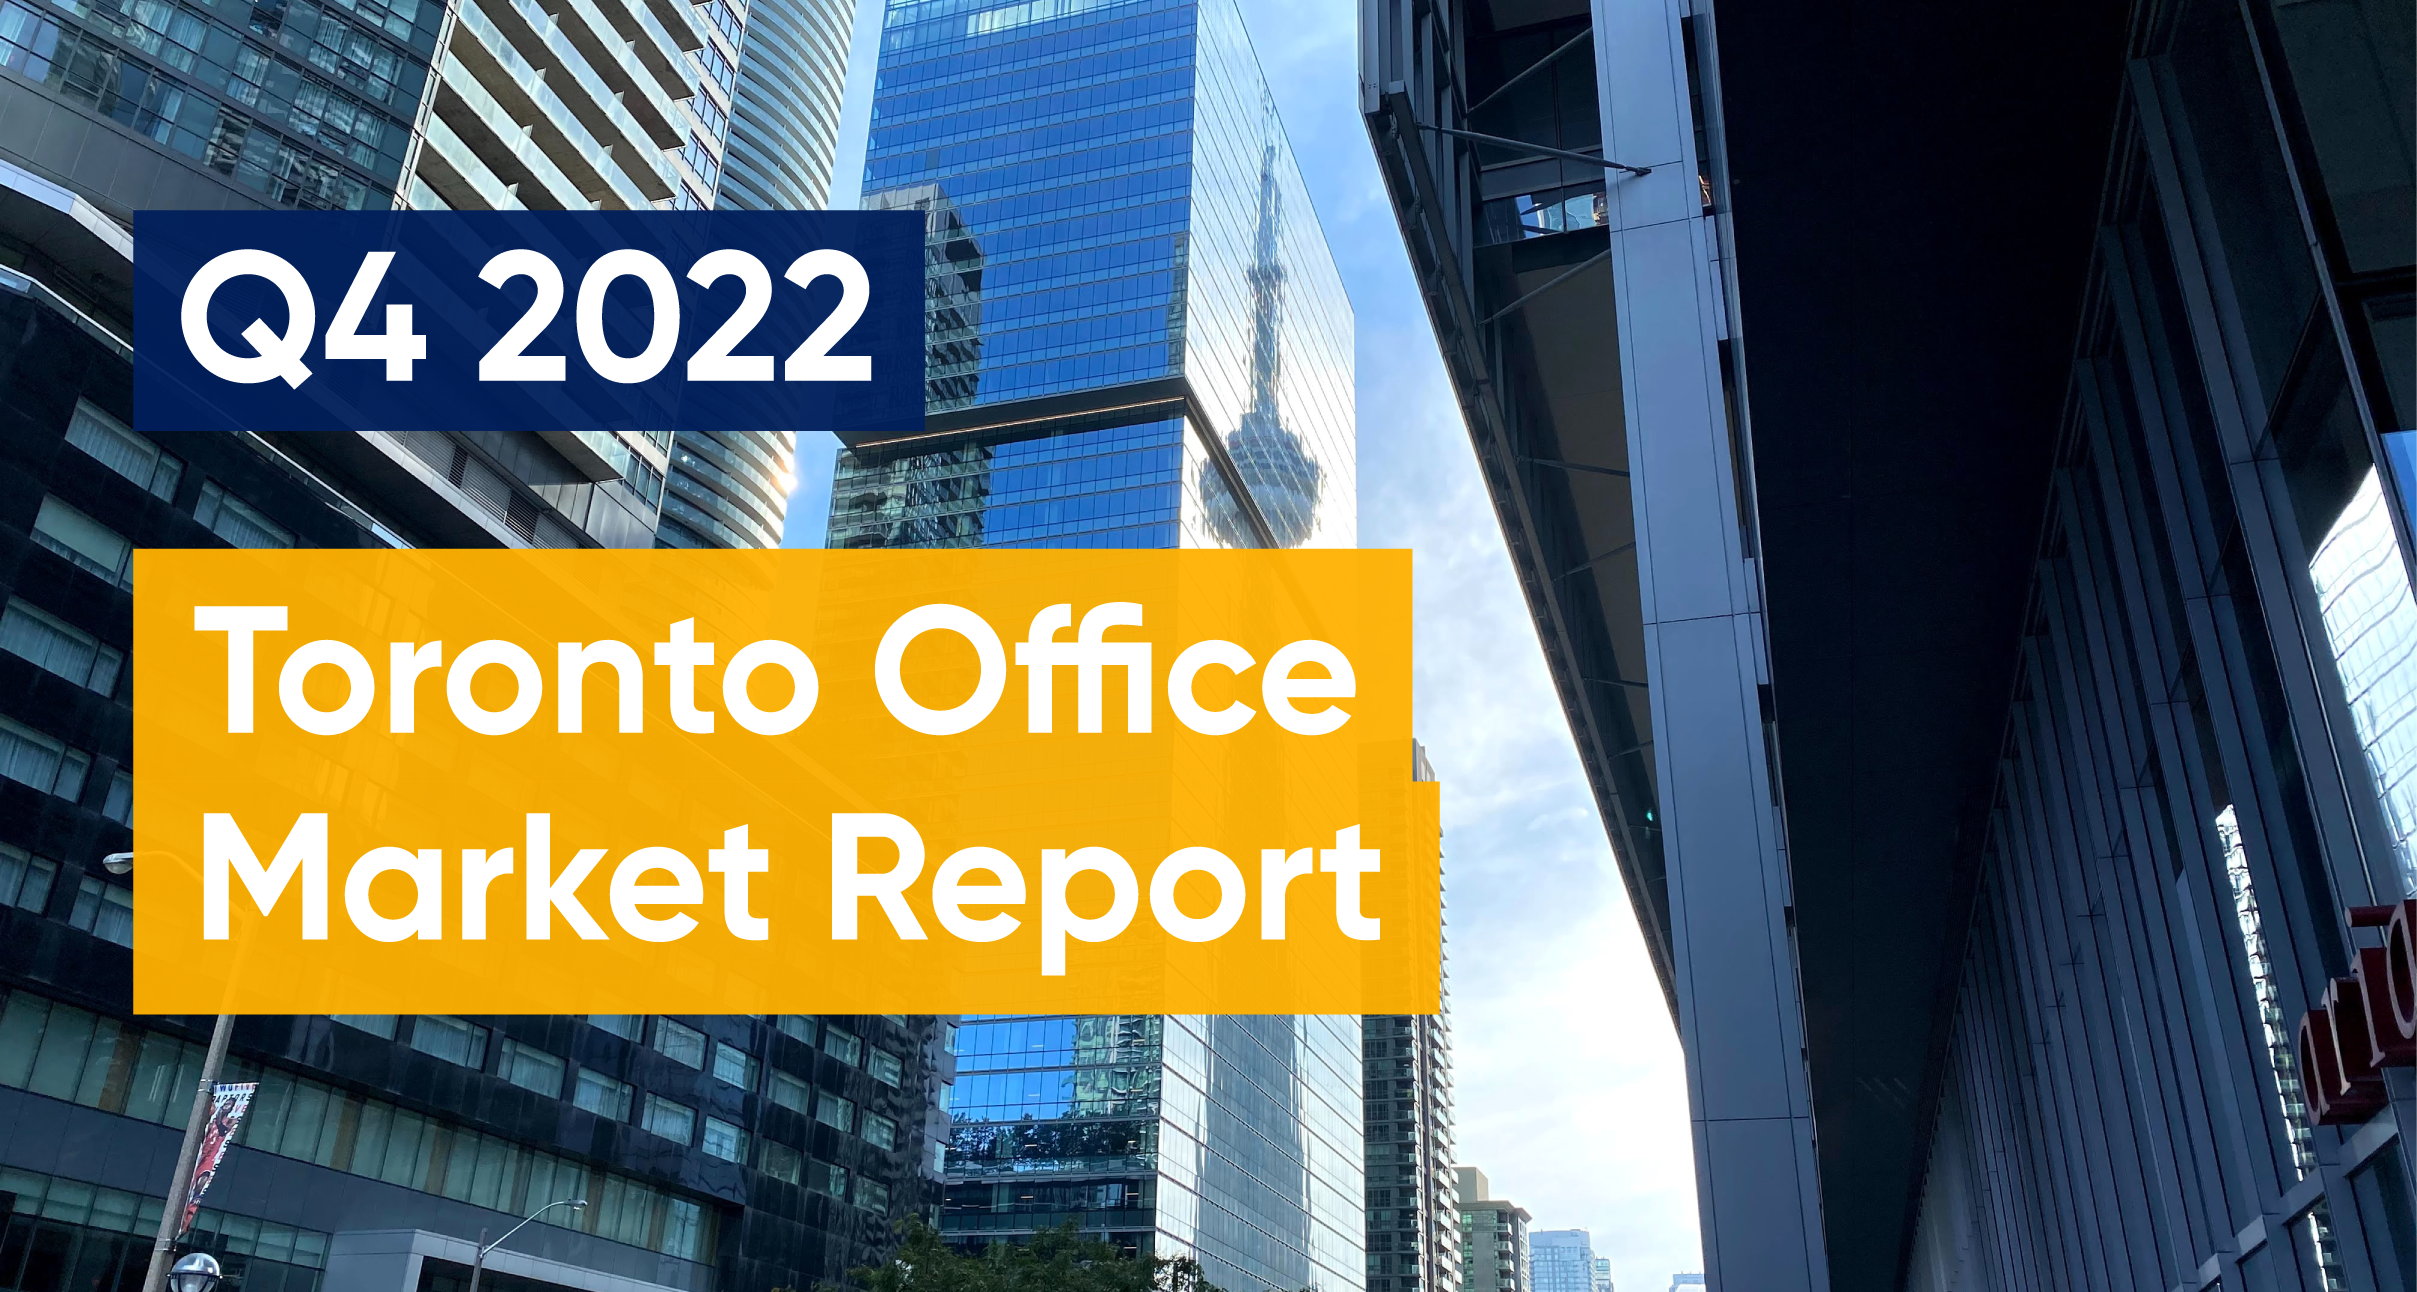 Q4 2022 Toronto Office Market Report